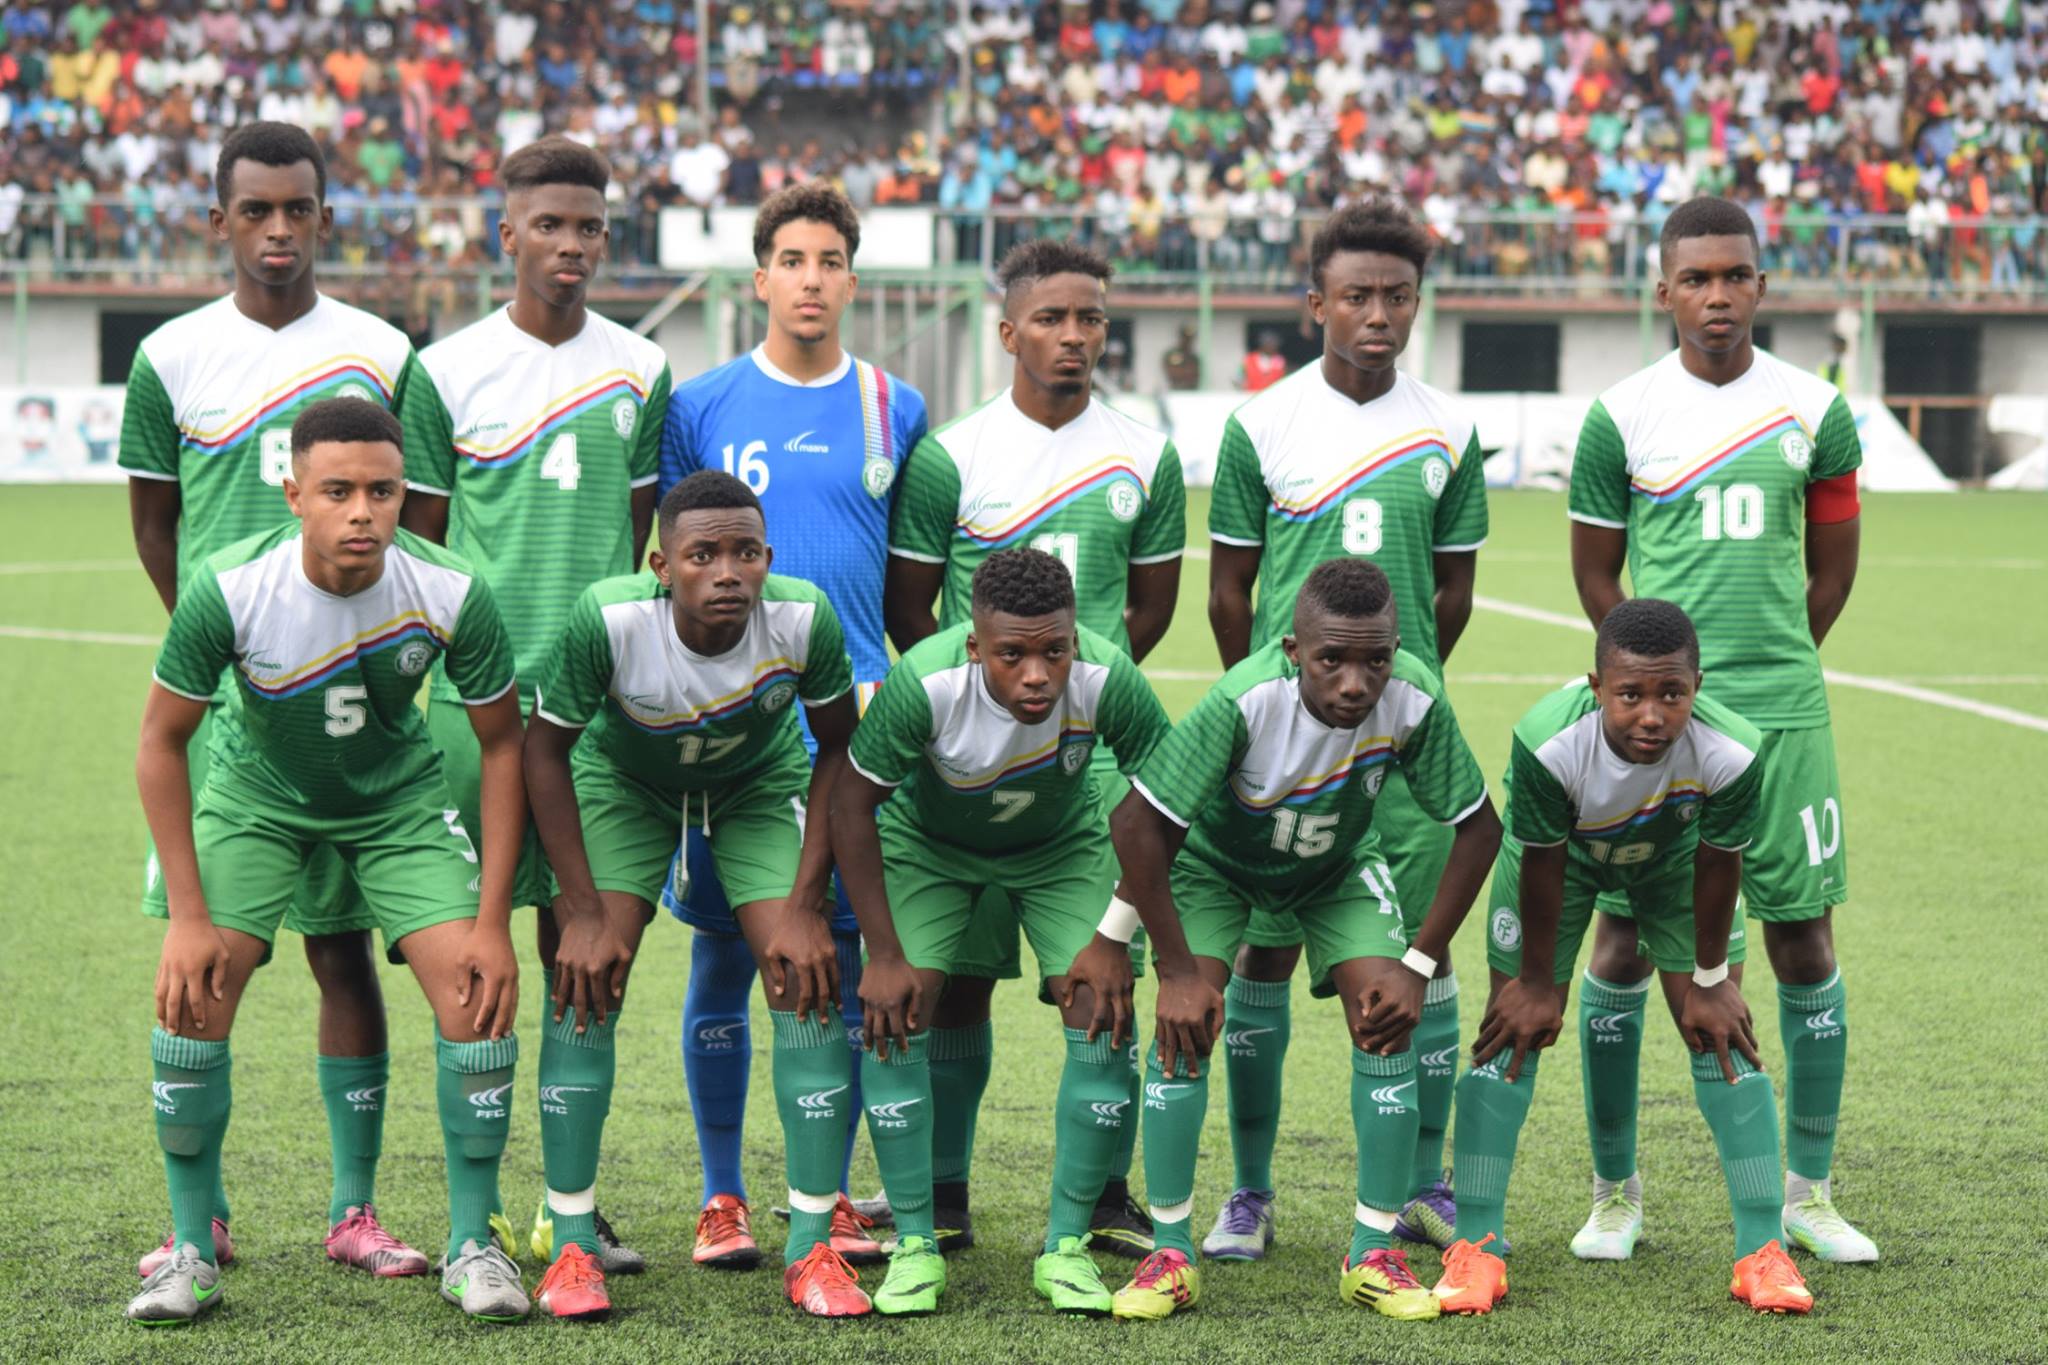 Cosafa, Cosafa Men&rsquo;s & Women&rsquo;s Cup U17 2019 : les groupes des Comores !, Comoros Football 269 | Portail du football des Comores